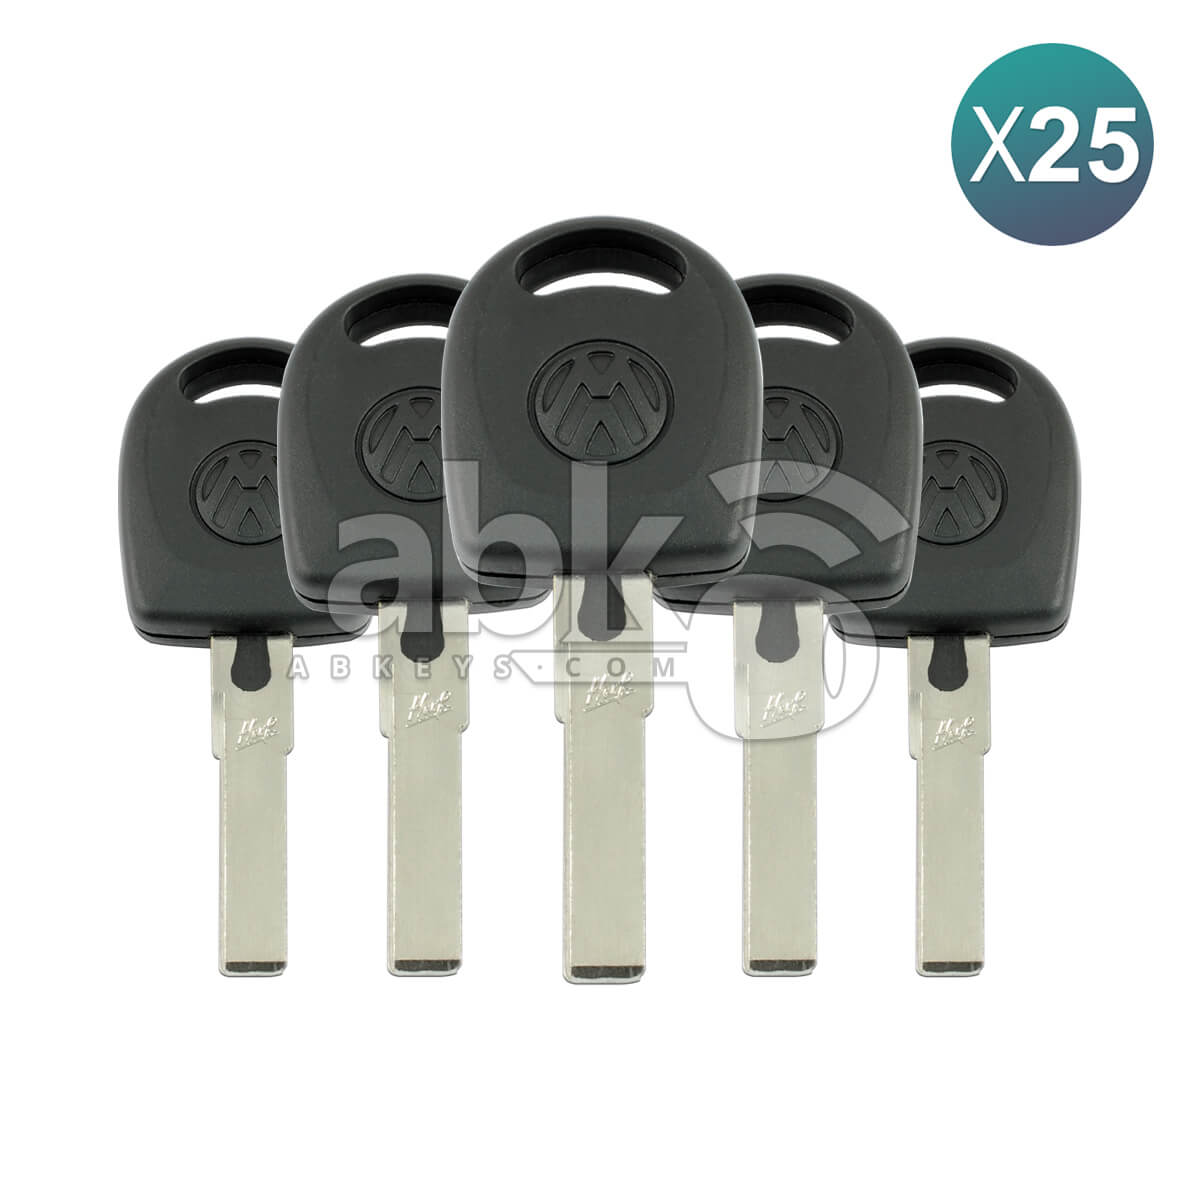 Volkswagen Chip Less Key HU66 25Pcs Bundle - ABK-8-OFF25 - ABKEYS.COM